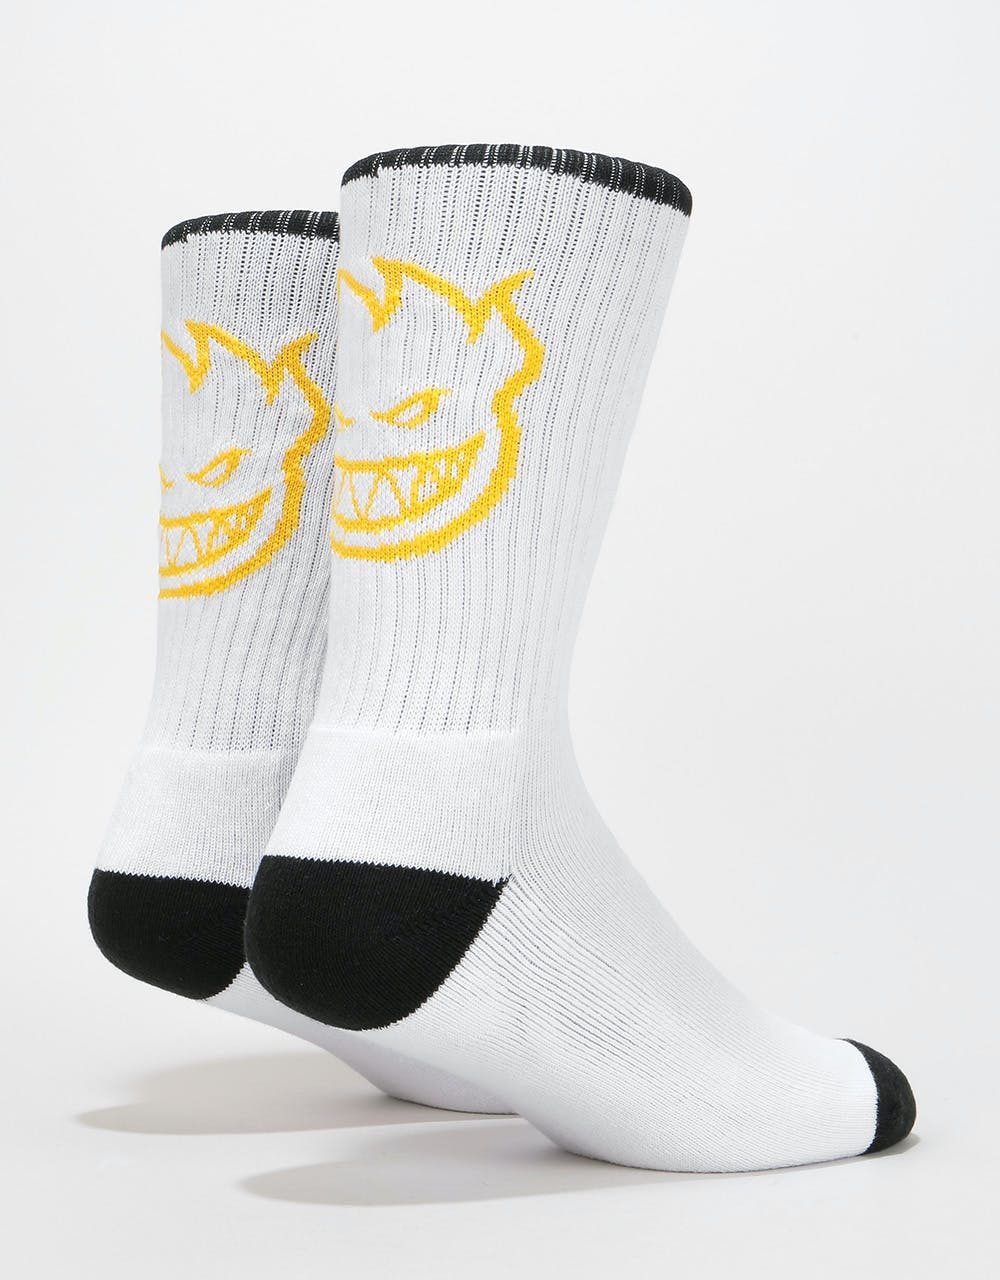 Spitfire Heads Up Socks - White/Black/Yellow